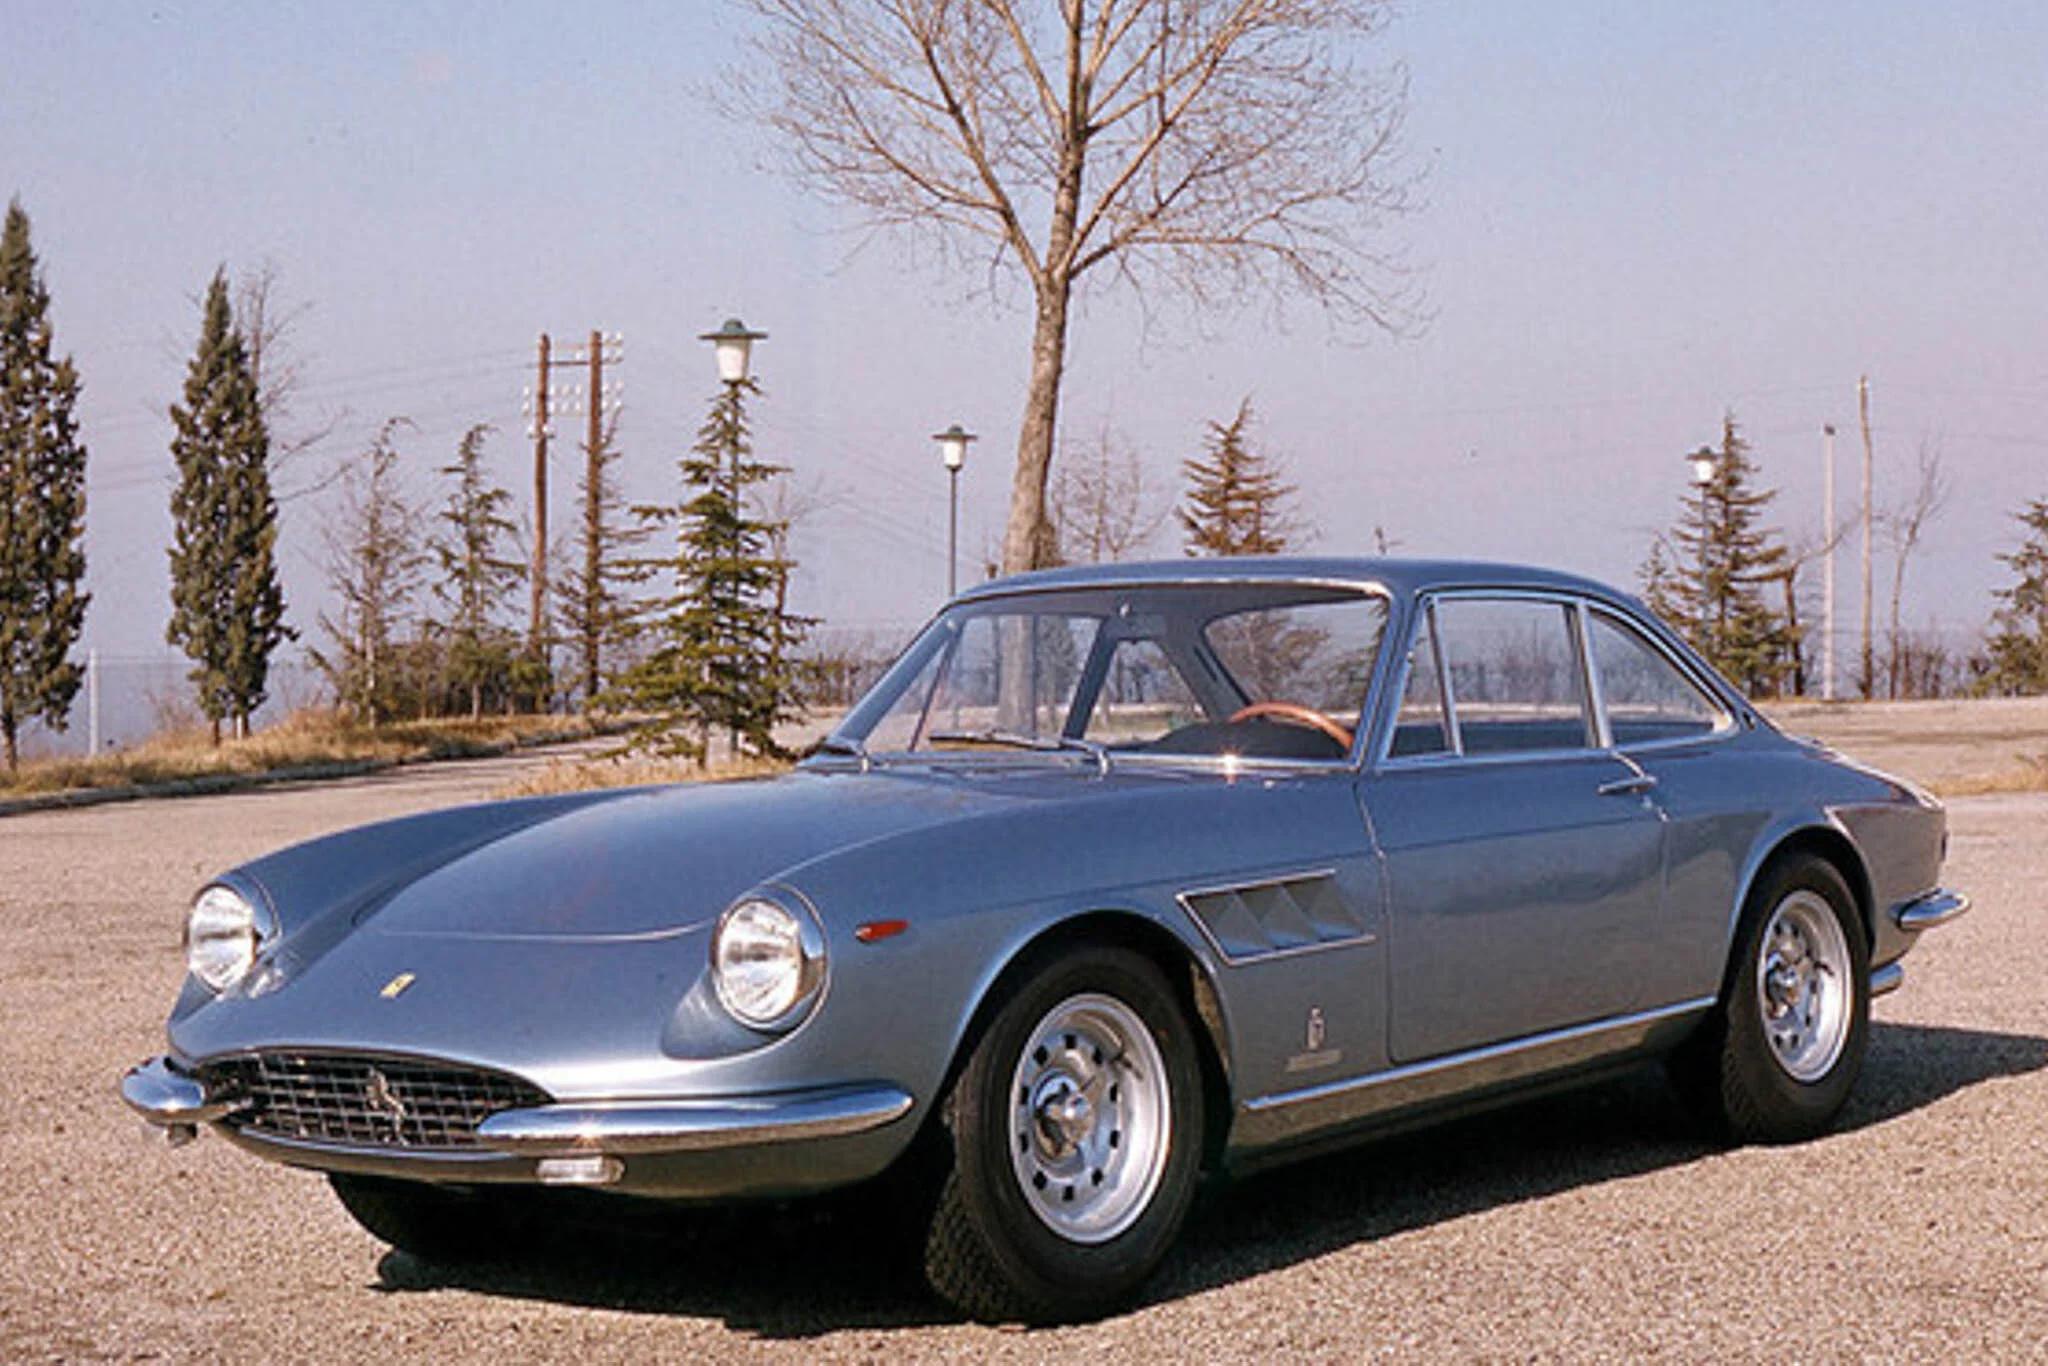 ferrari 330 engine - How much horsepower does a 1966 Ferrari 330 GTC have